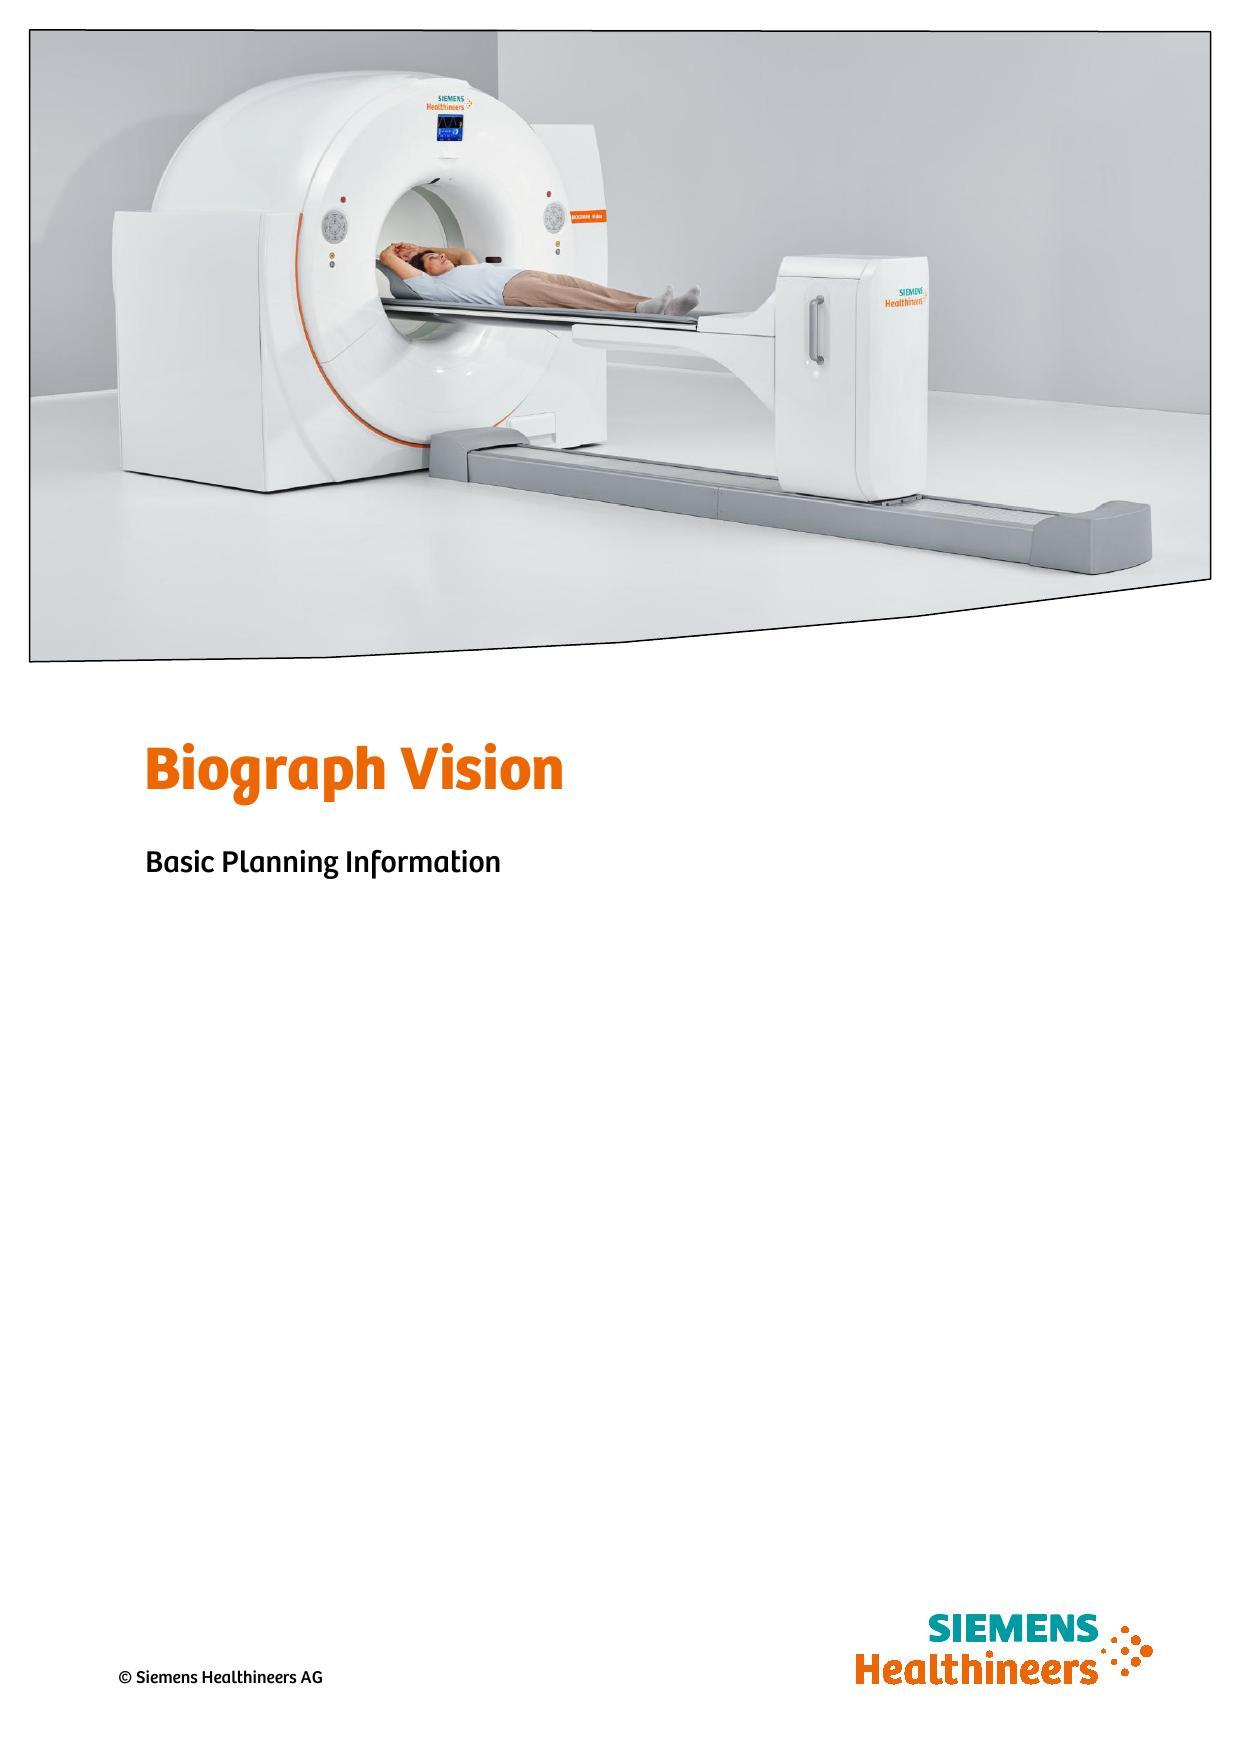 siemens-healthineers-biograph-vision-basic-planning-information.pdf